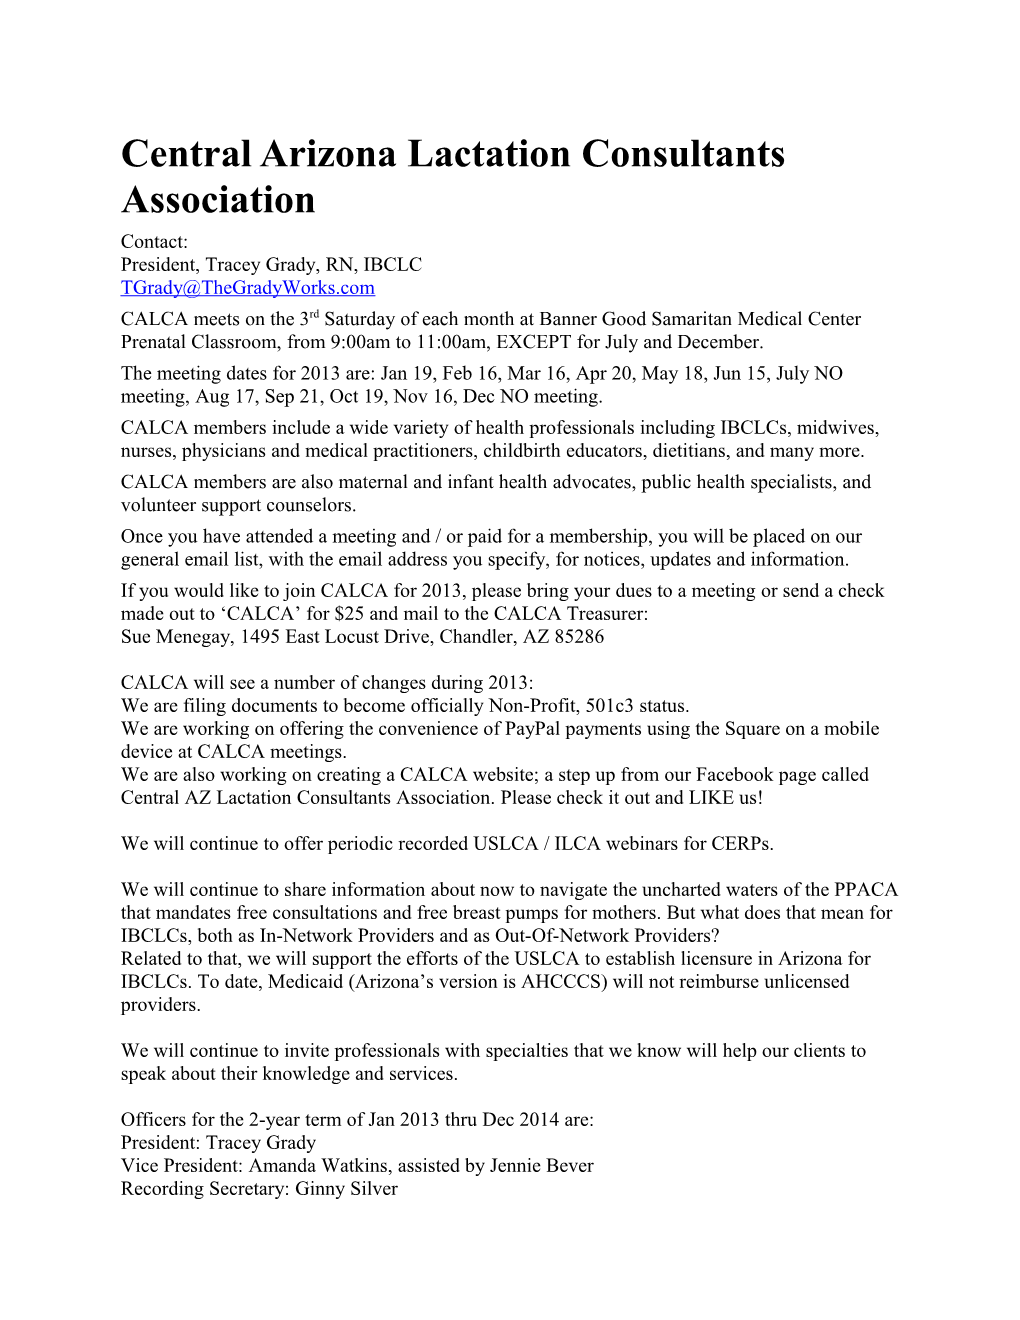 Central Arizona Lactation Consultants Association